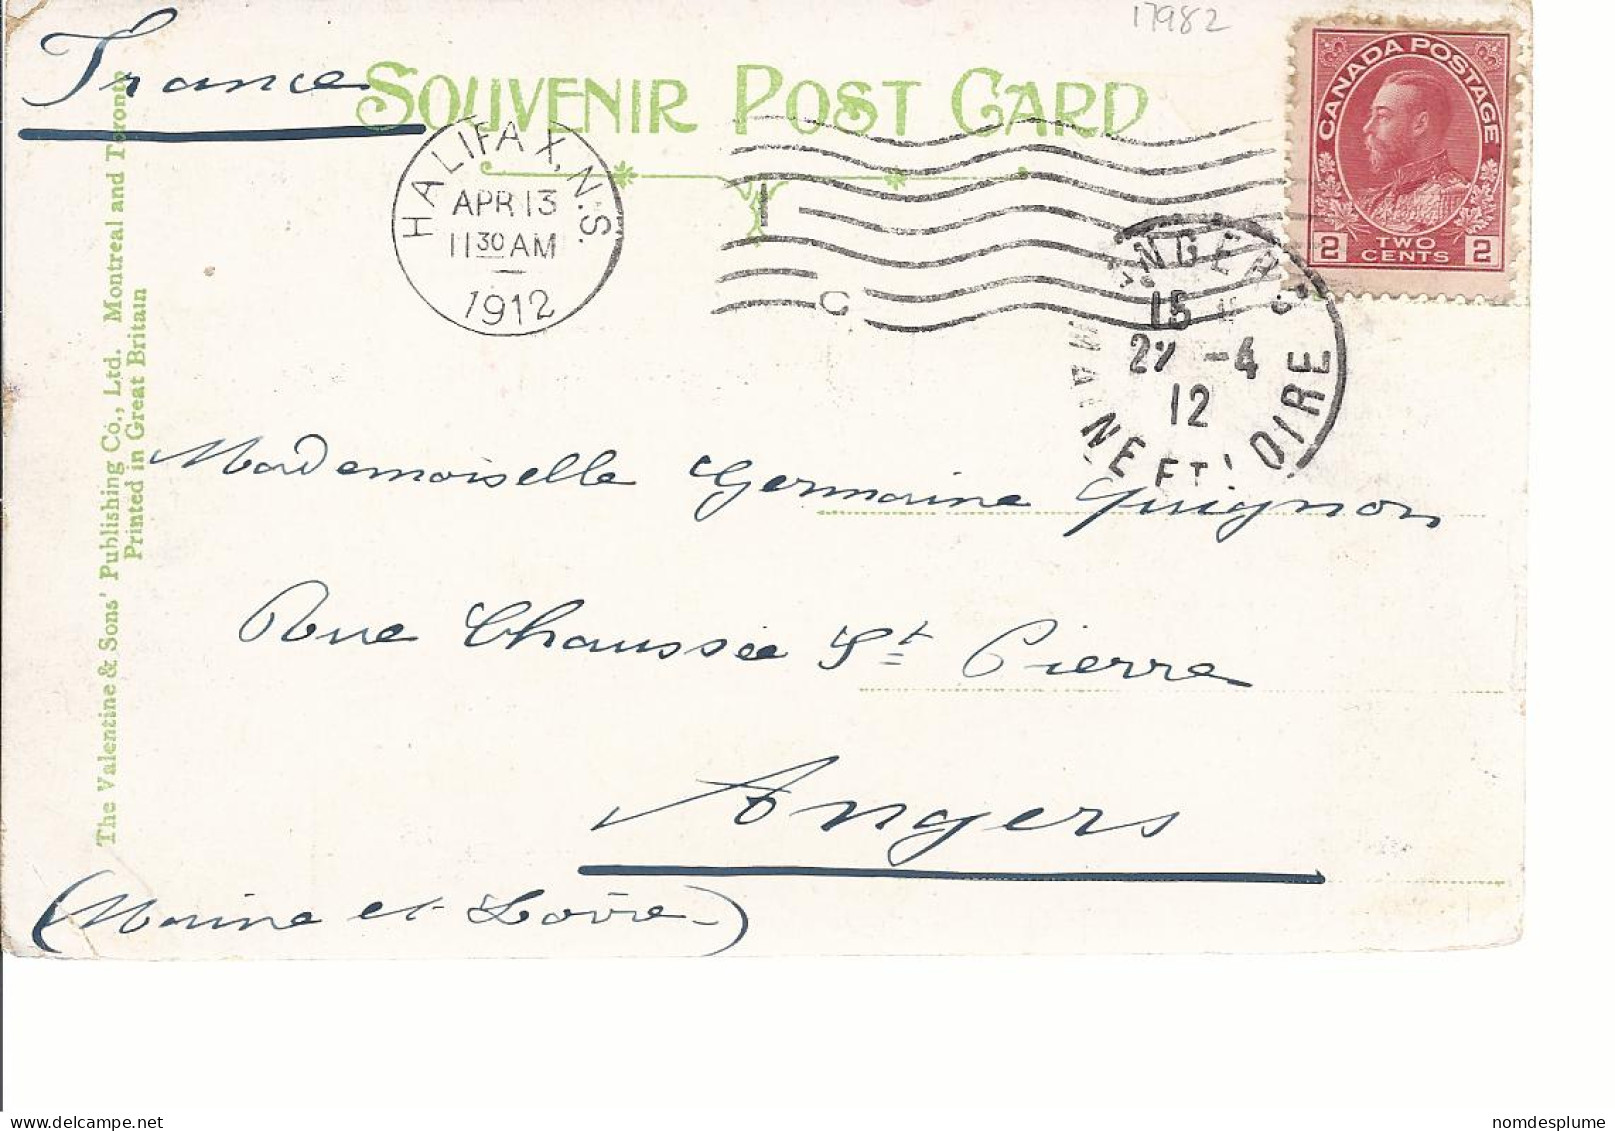 17982) Canada NS Halifax General Post Office Postmark Cancel  Undivided Back See Back - Halifax